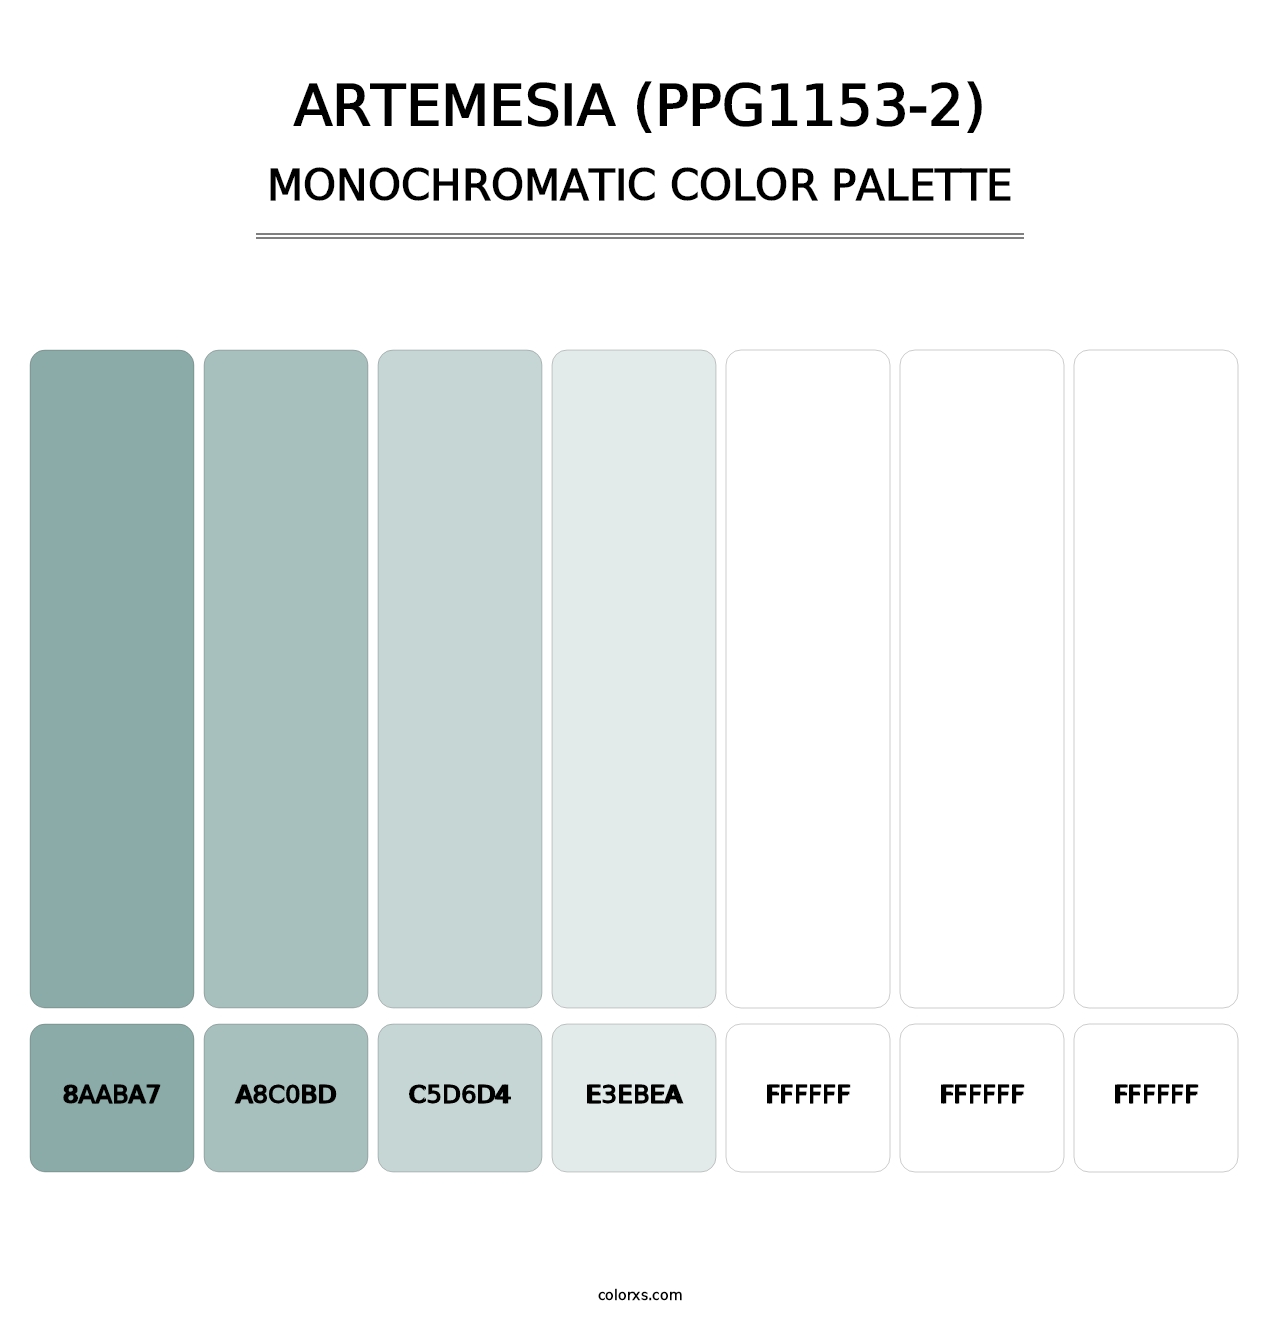 Artemesia (PPG1153-2) - Monochromatic Color Palette